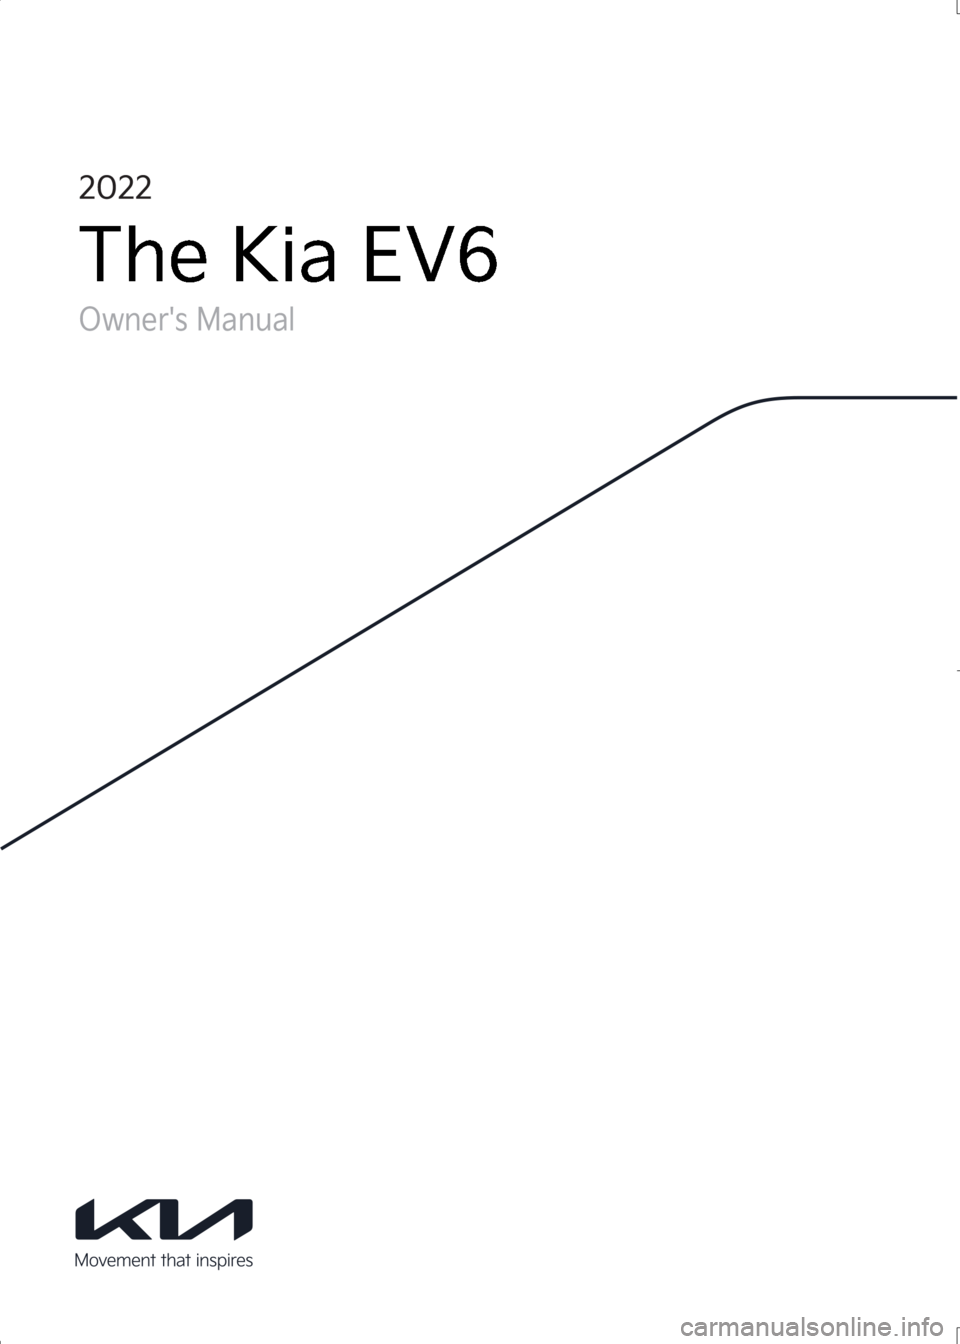 KIA EV6 2022  Owners Manual 
T
h
e
 
K
i a   E V 6 